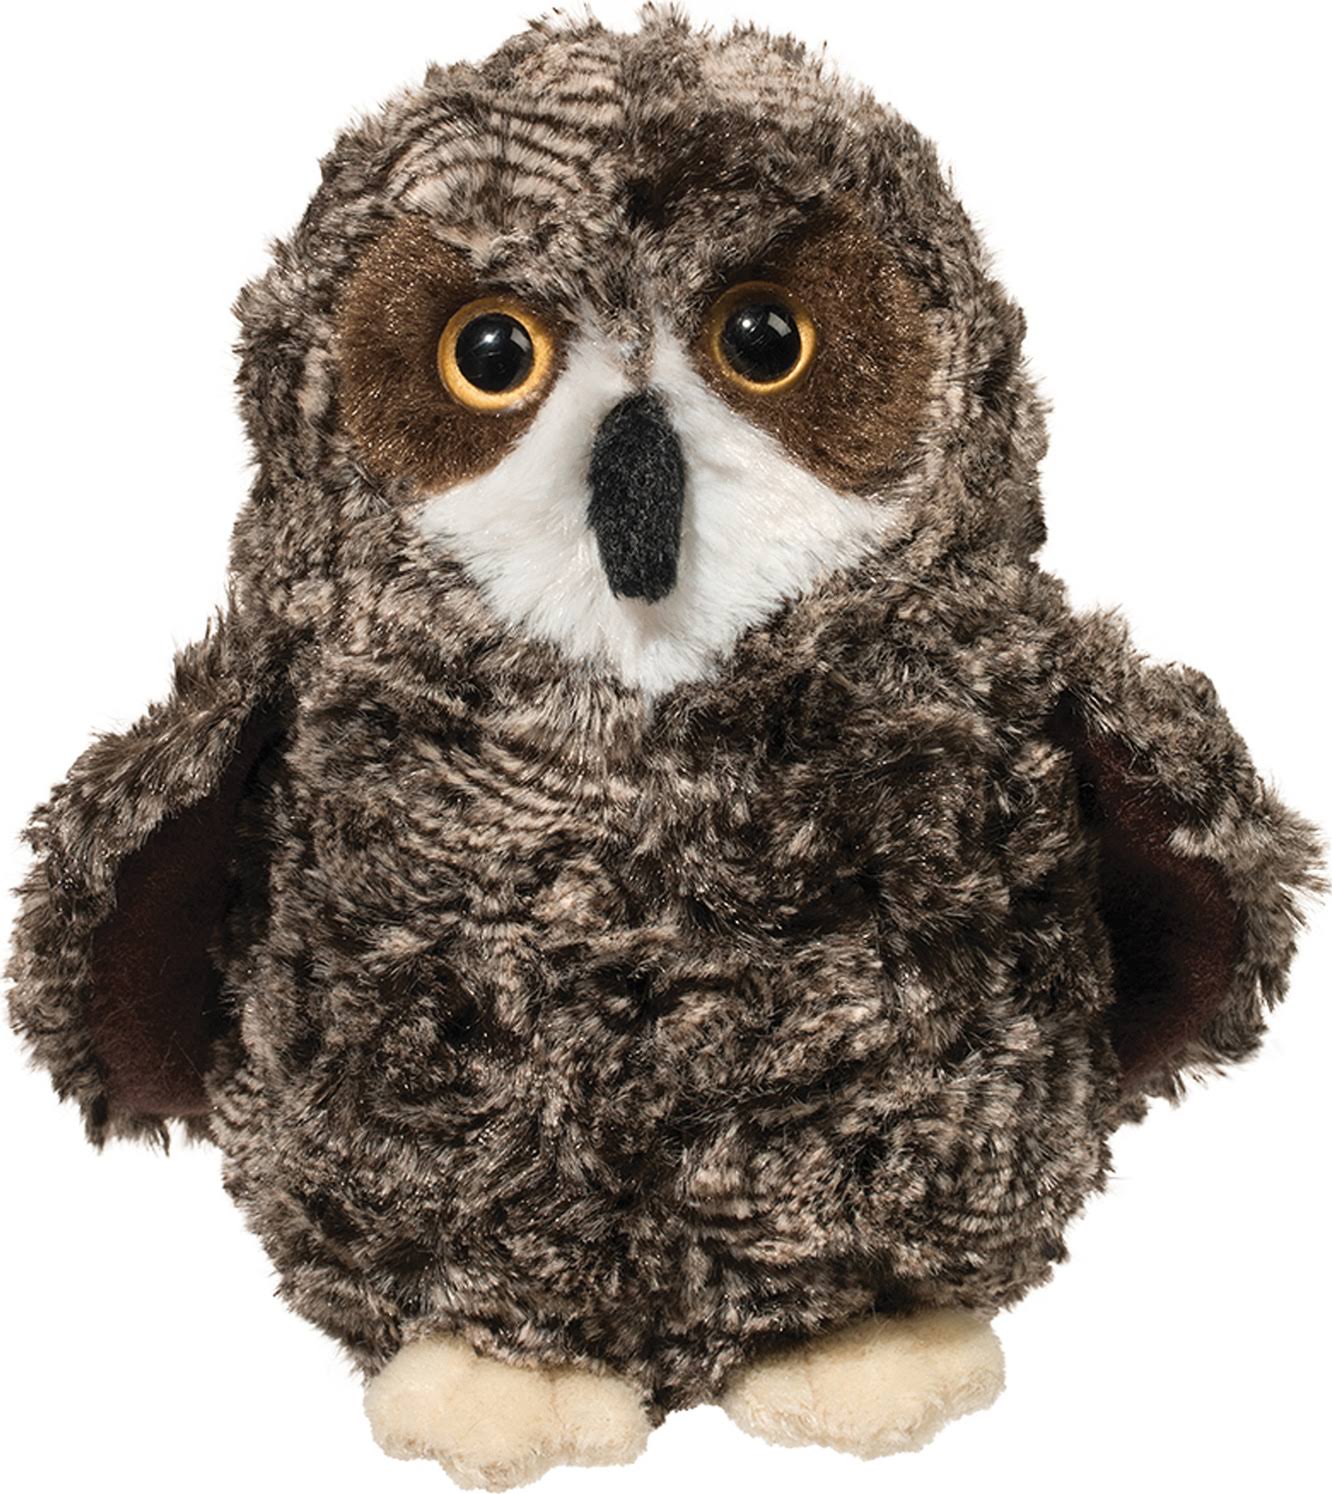 Douglas Shrill Saw Whet Owl Plush Stuffed Bird Animal Cuddle Toy - 10"